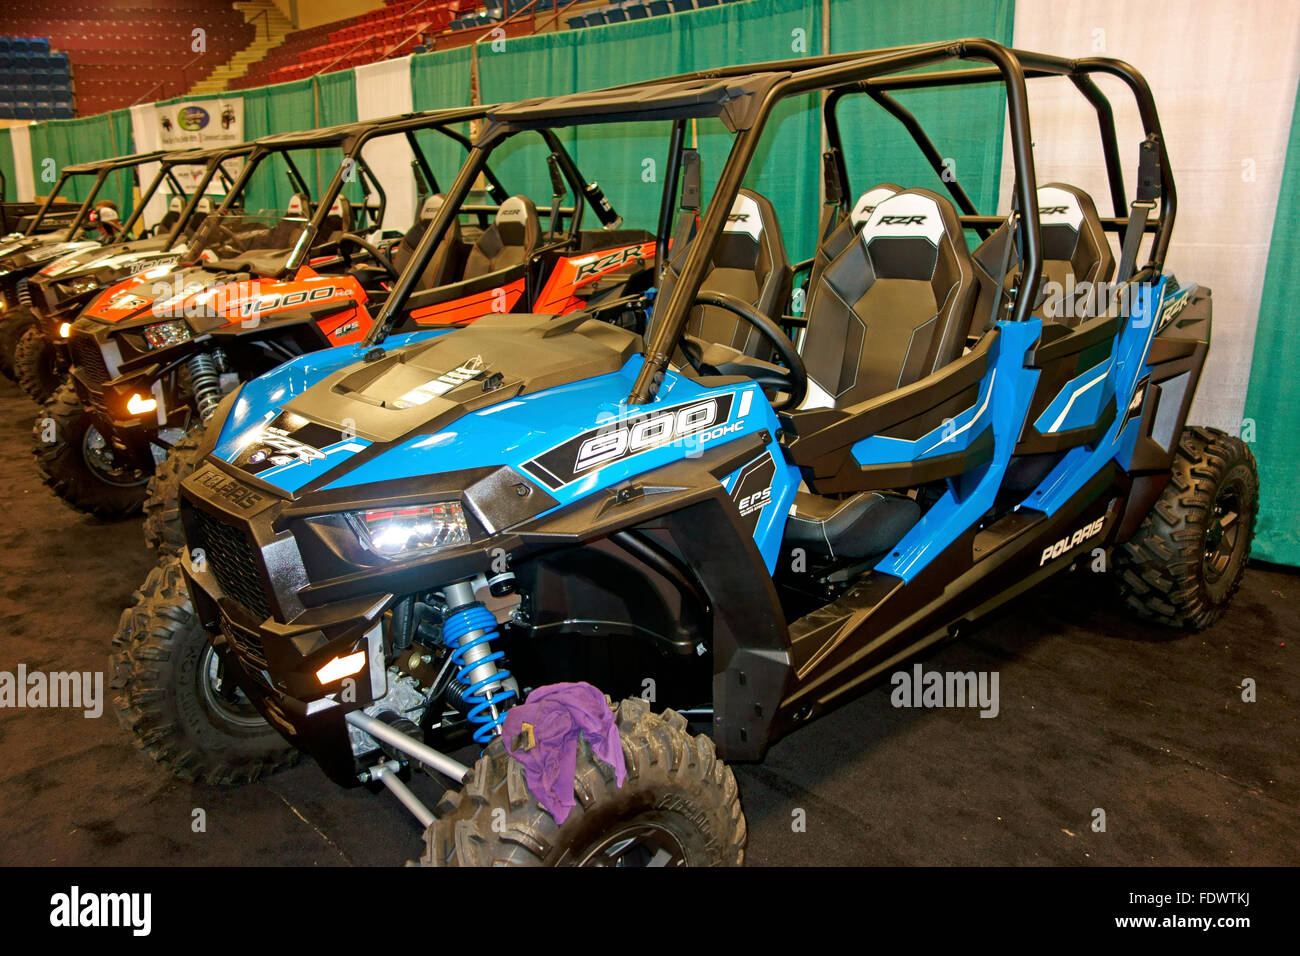 Polaris Off-Road Vehicles, Four Wheelers, SXS, ATVs, RZR on display at a fair Stock Photo